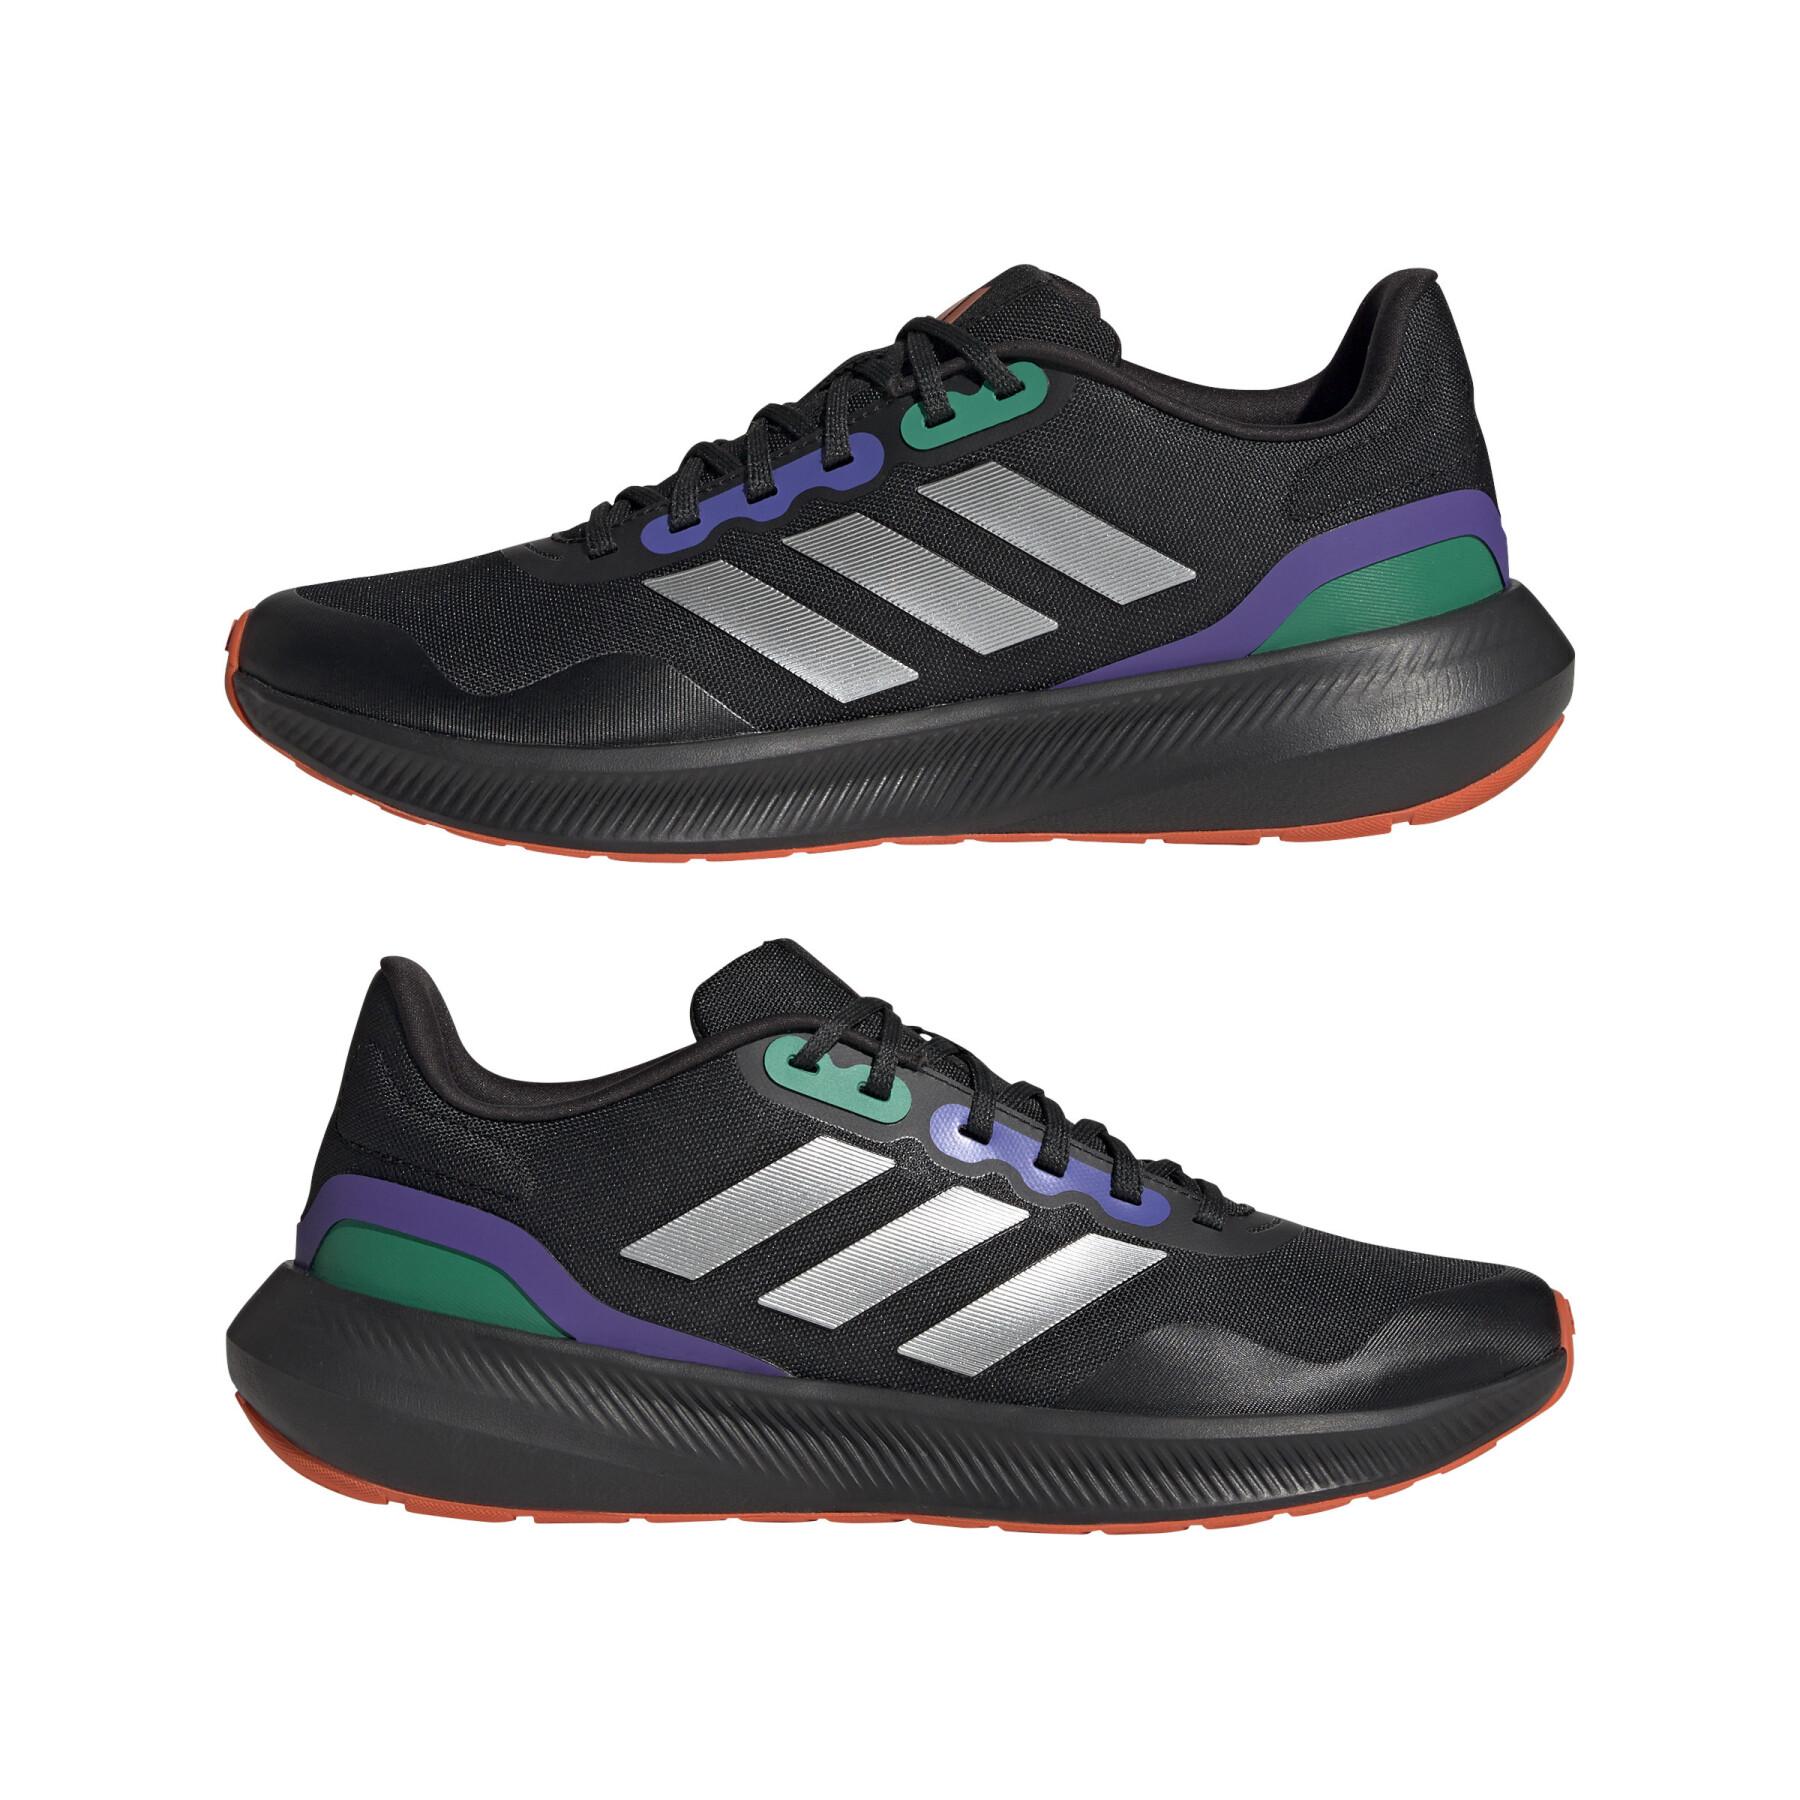 Running shoes adidas Runfalcon 3 Tr